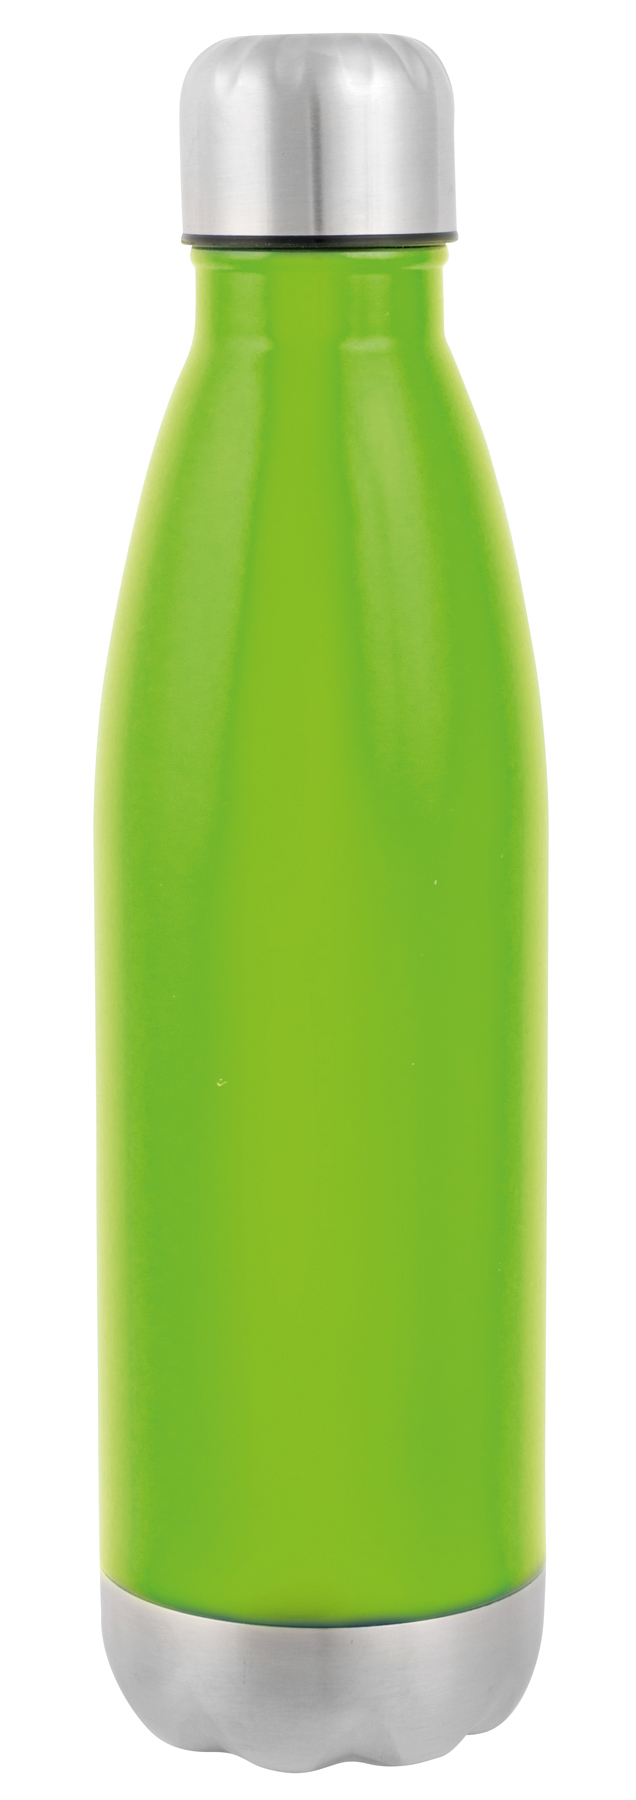 Double-walled vacuum bottle GOLDEN TASTE - green